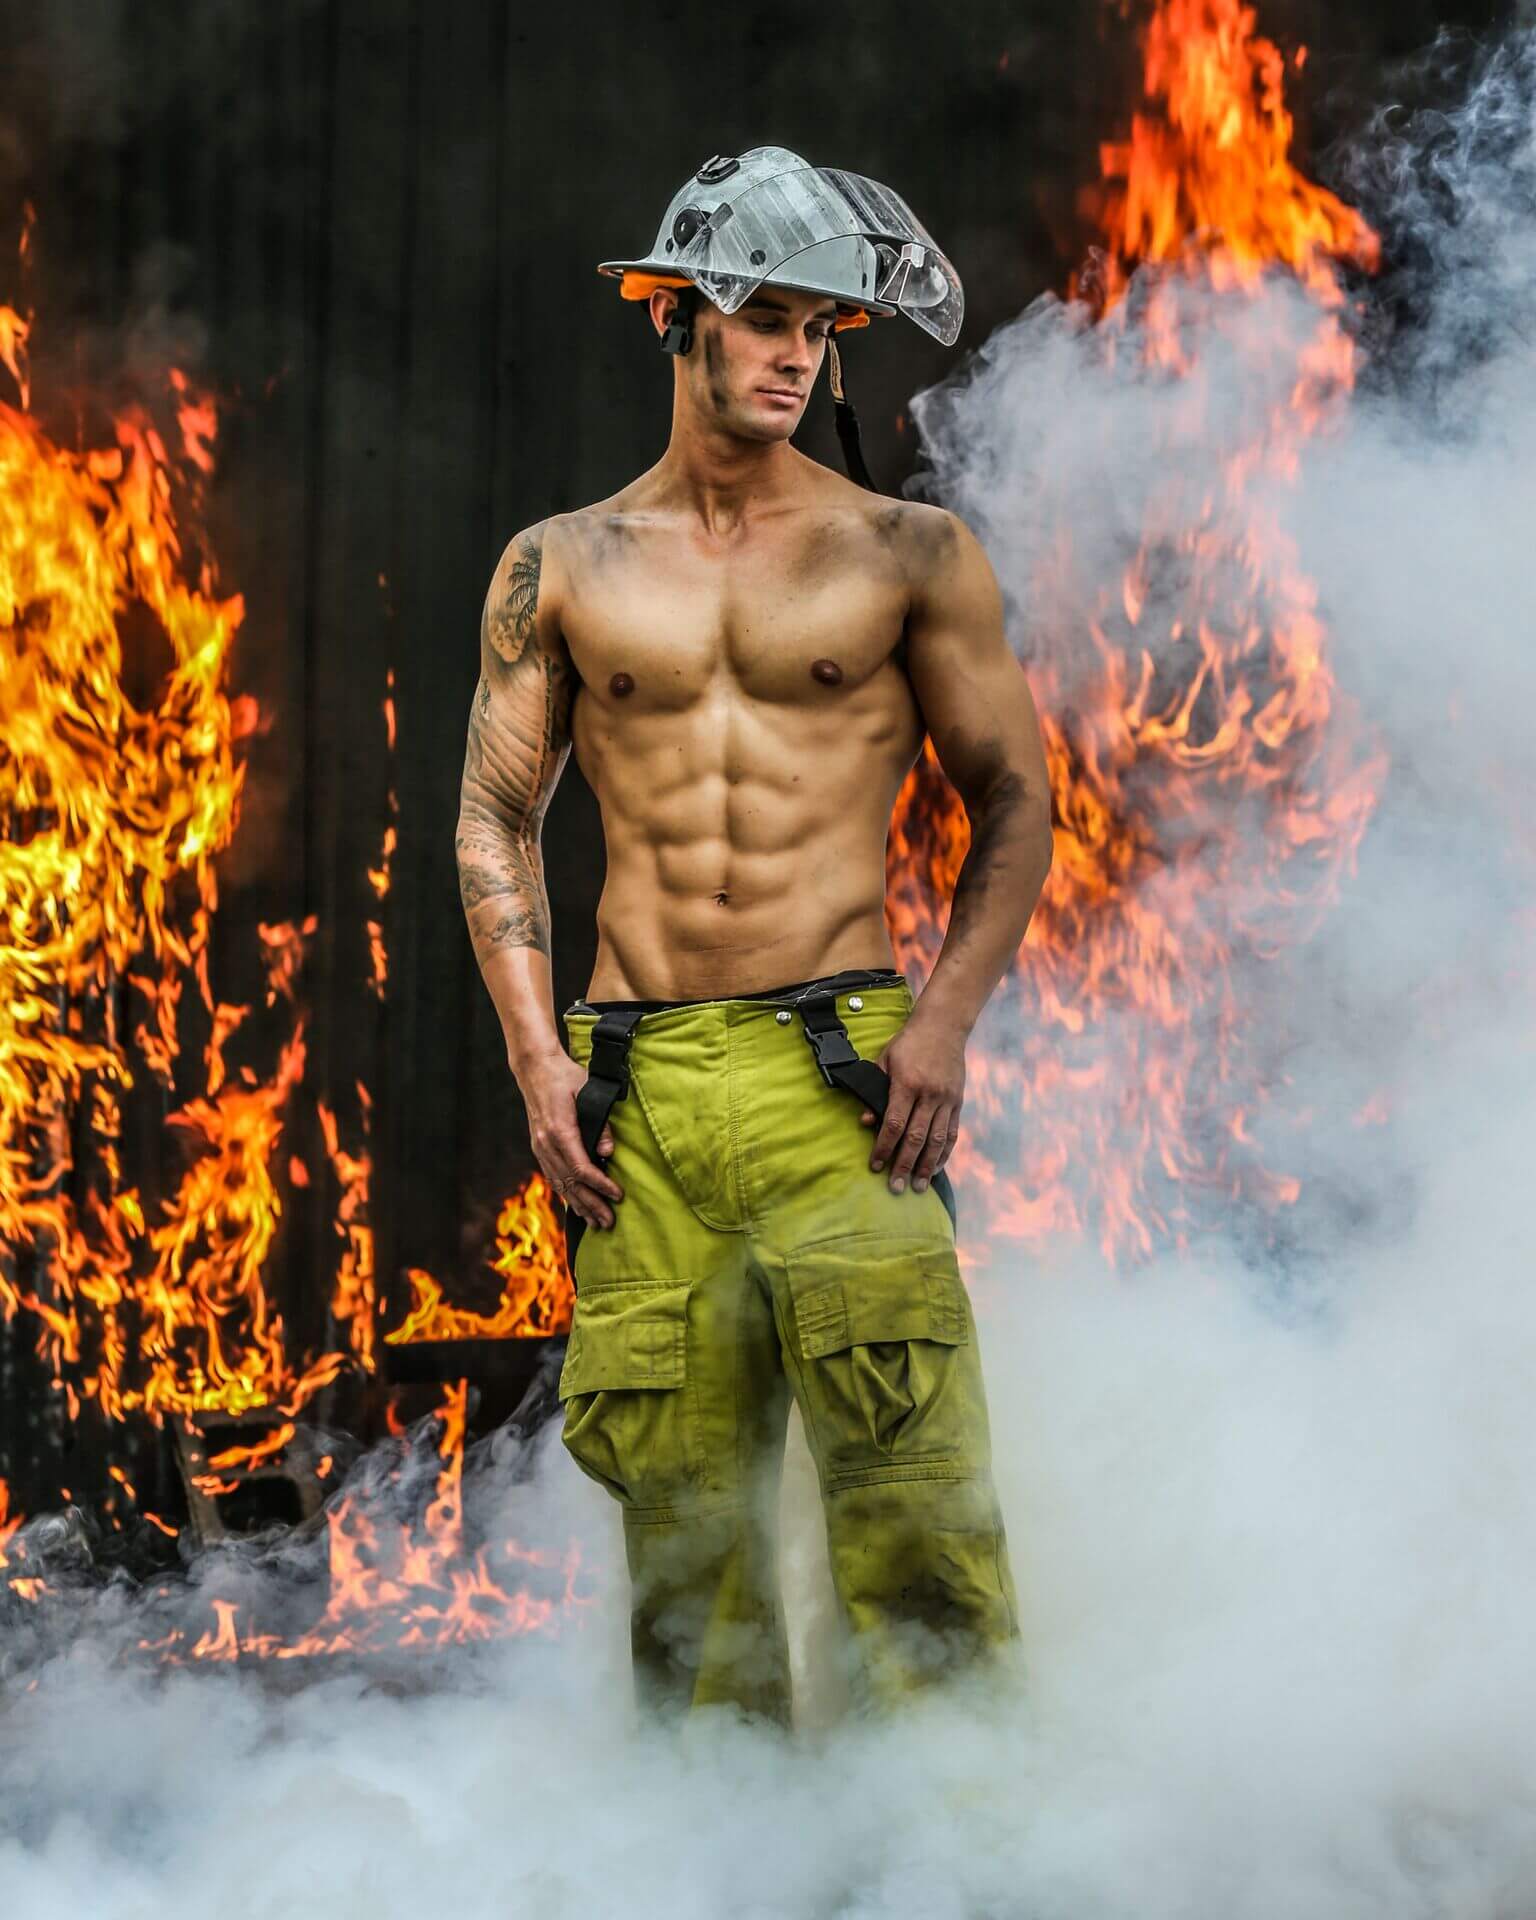 Il calendario 2019 dei pompieri australiani